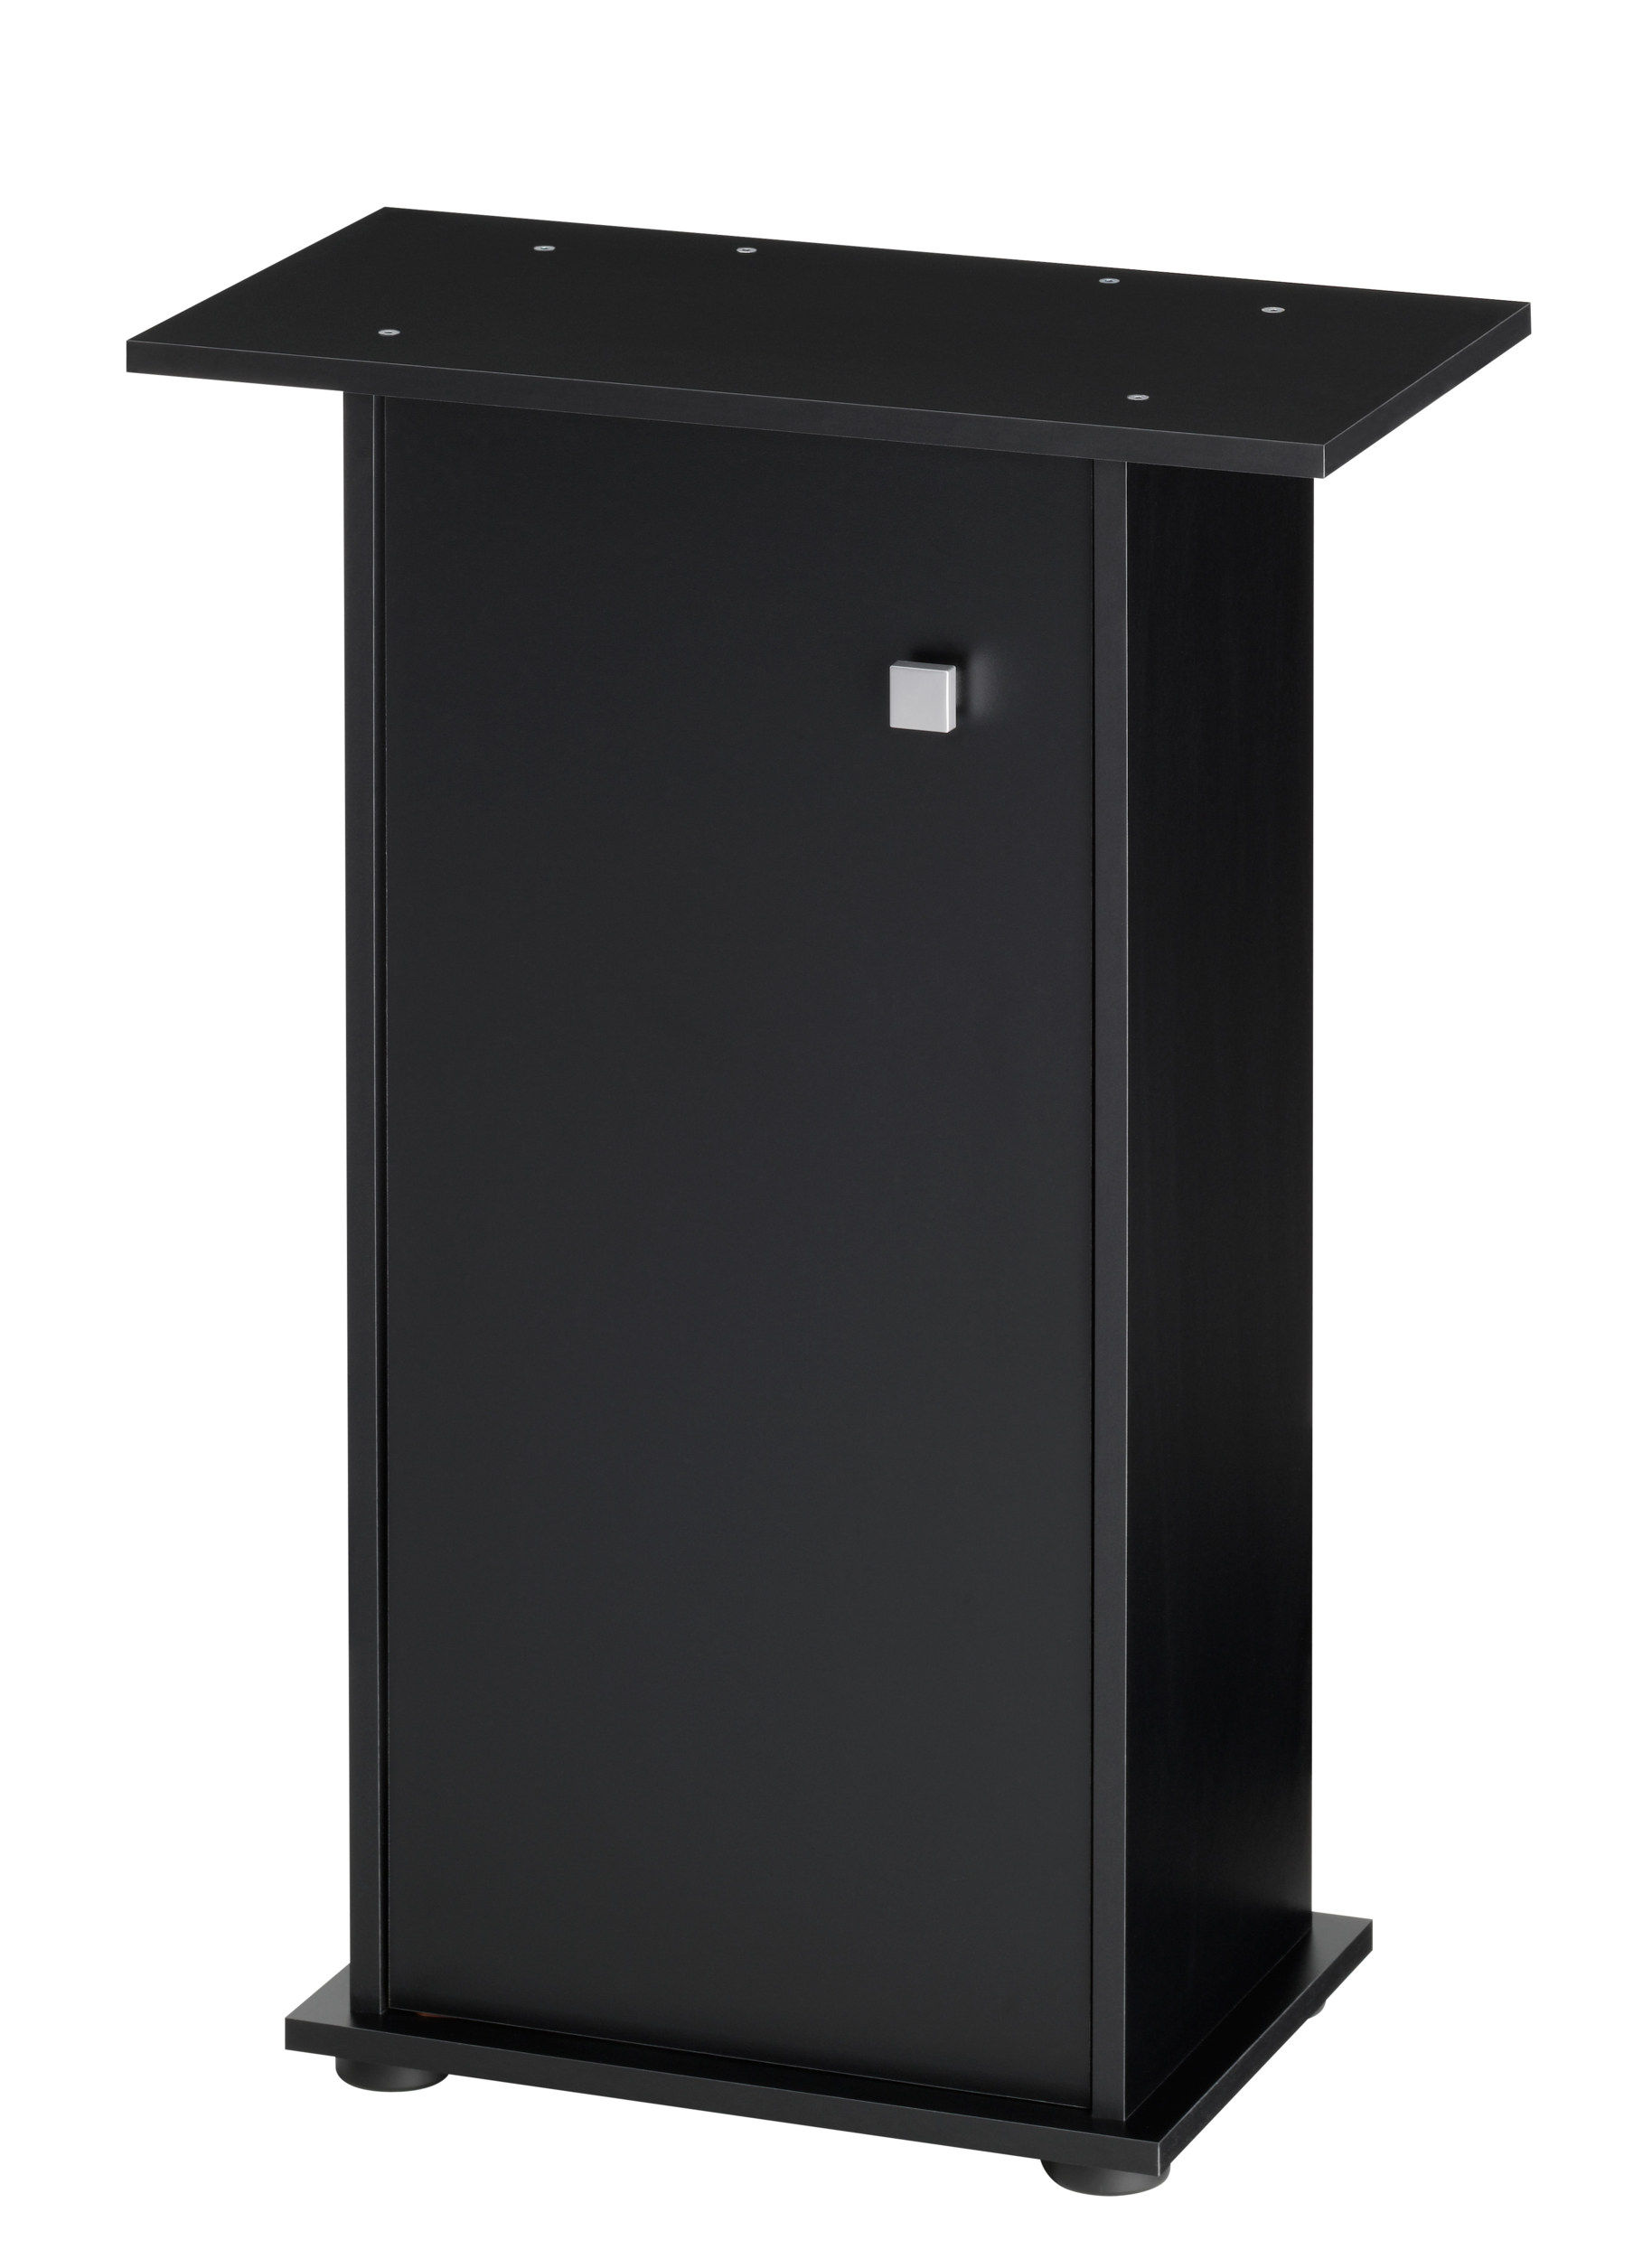 EHEIM AquaCab 54 Noir meuble avec porte pour aquarium de 60 x 30 cm